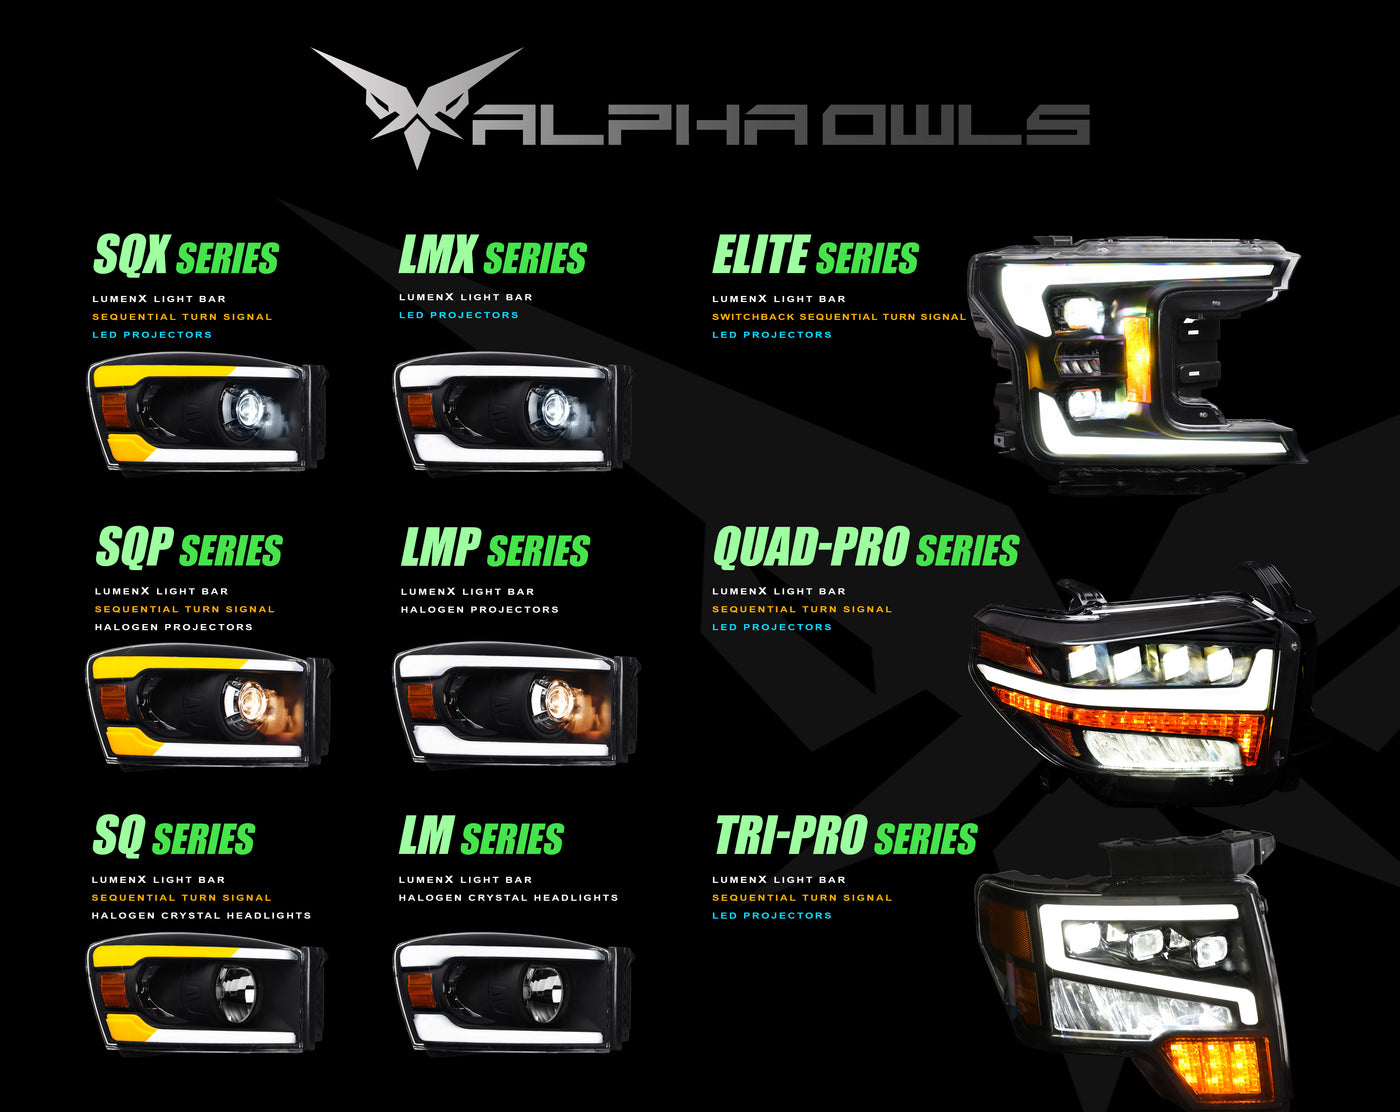 Alpha Owls Headlights, Alpha Owls Ford Headlights, Ford 2005-2009 Headlights, Ford Mustang Headlights, Headlights, Chrome housing Headlights